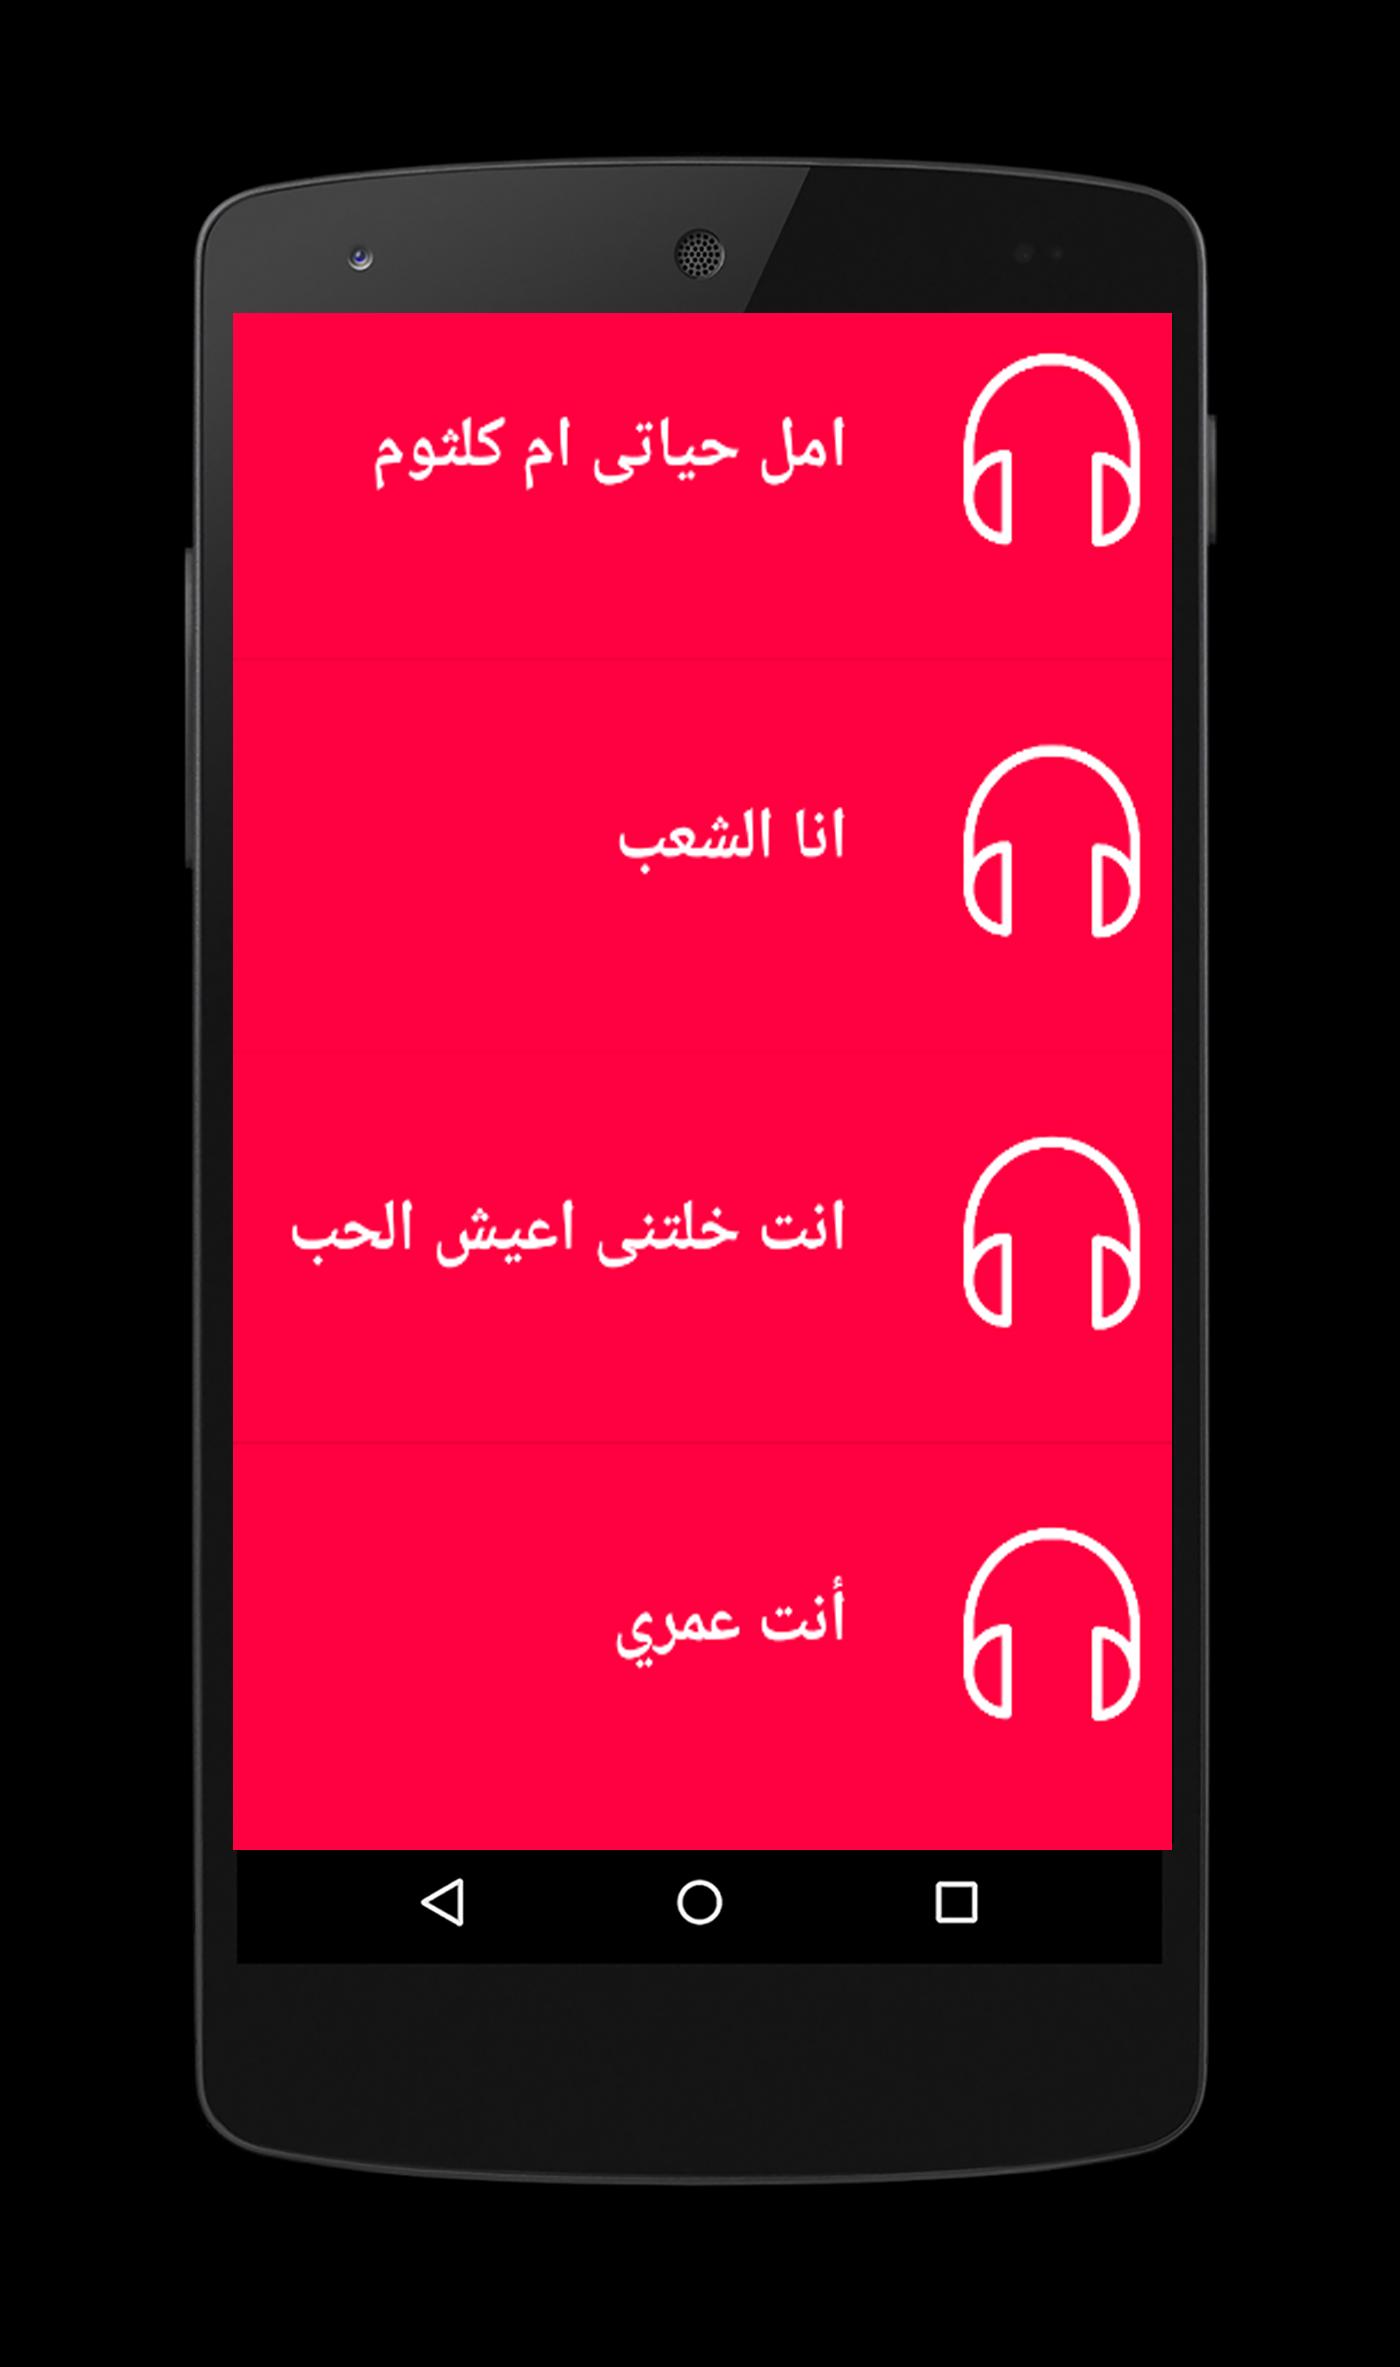 ام كلثوم بدون نت Oum Kalthoum For Android Apk Download